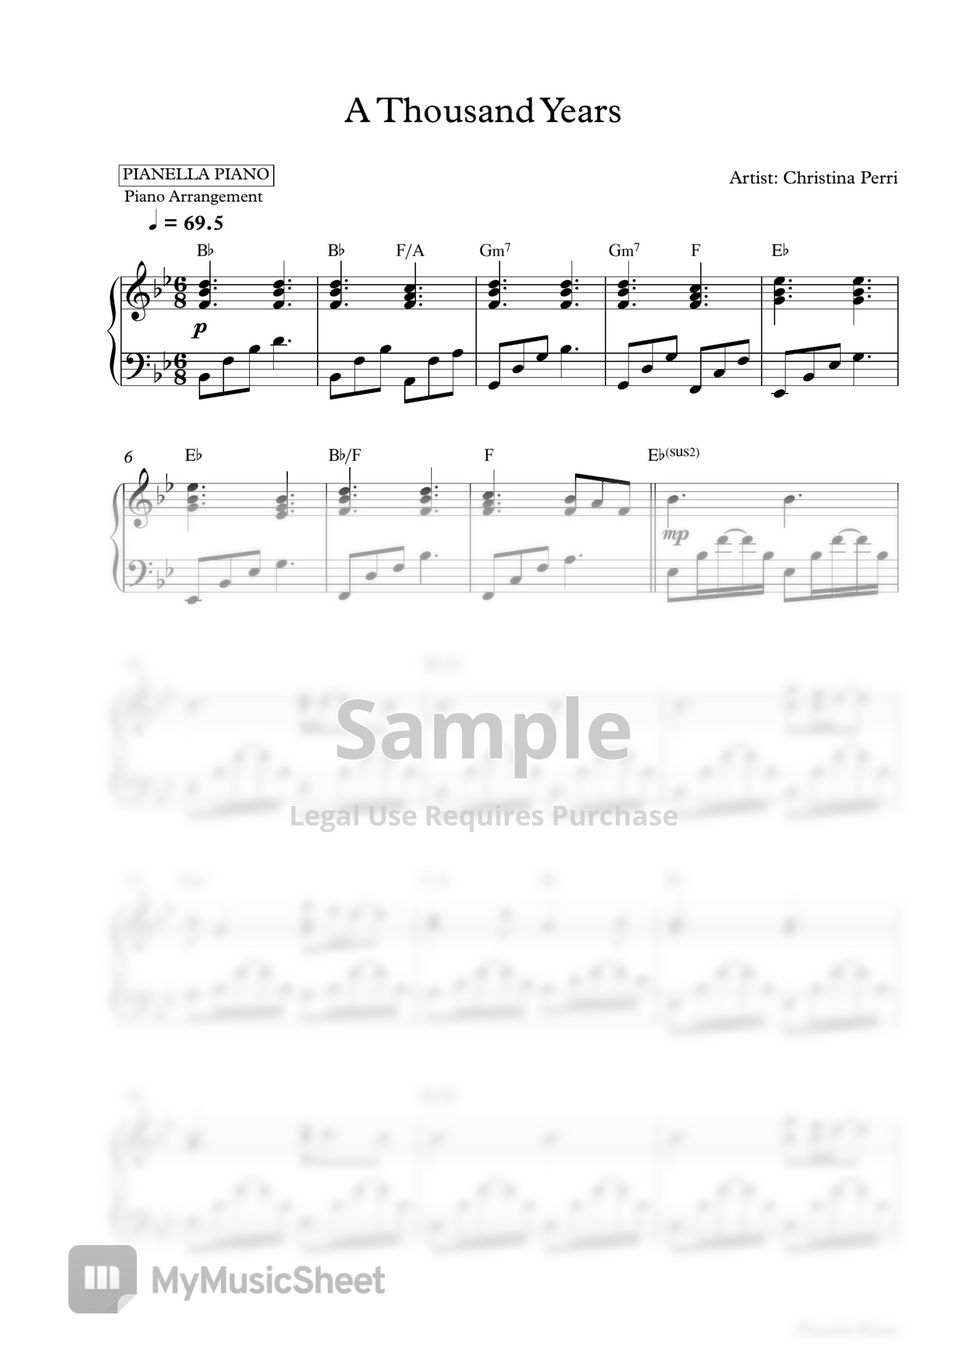 Christina Perri - A Thousand Years (Piano Sheet) by Pianella Piano